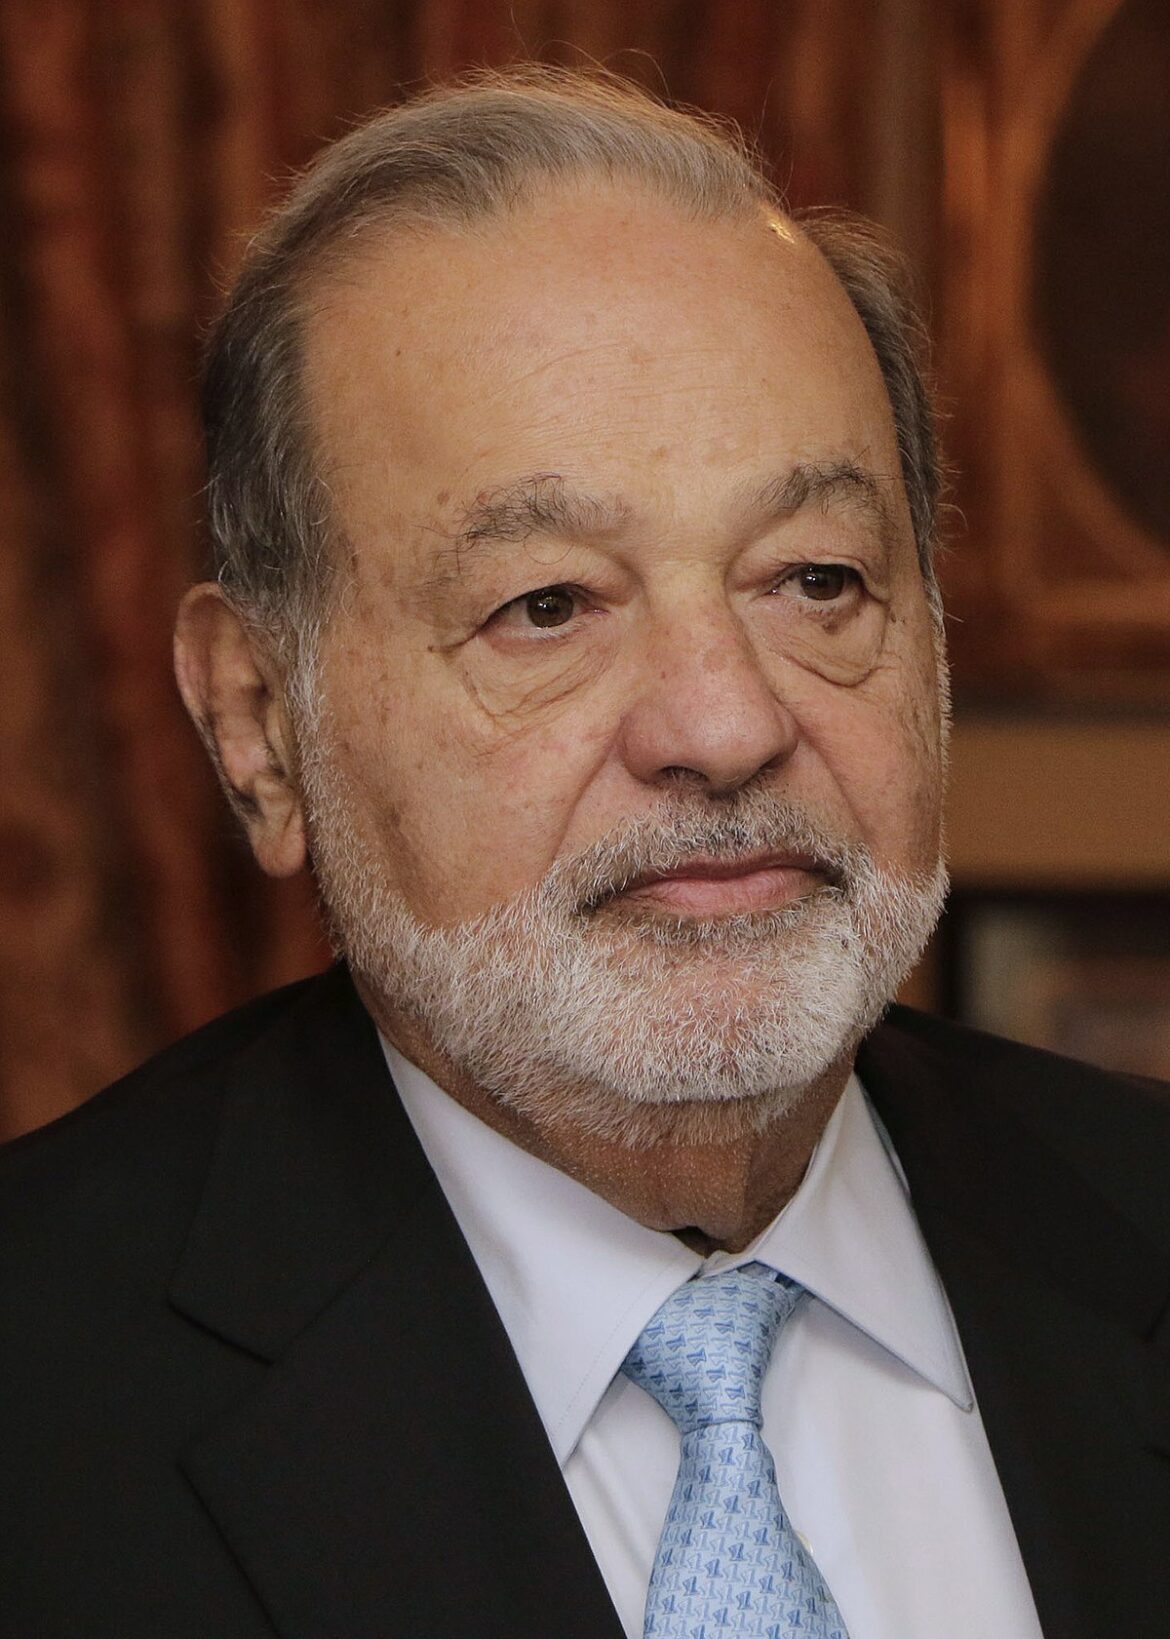 Carlos Slim Helú – The Mexican Billionaire